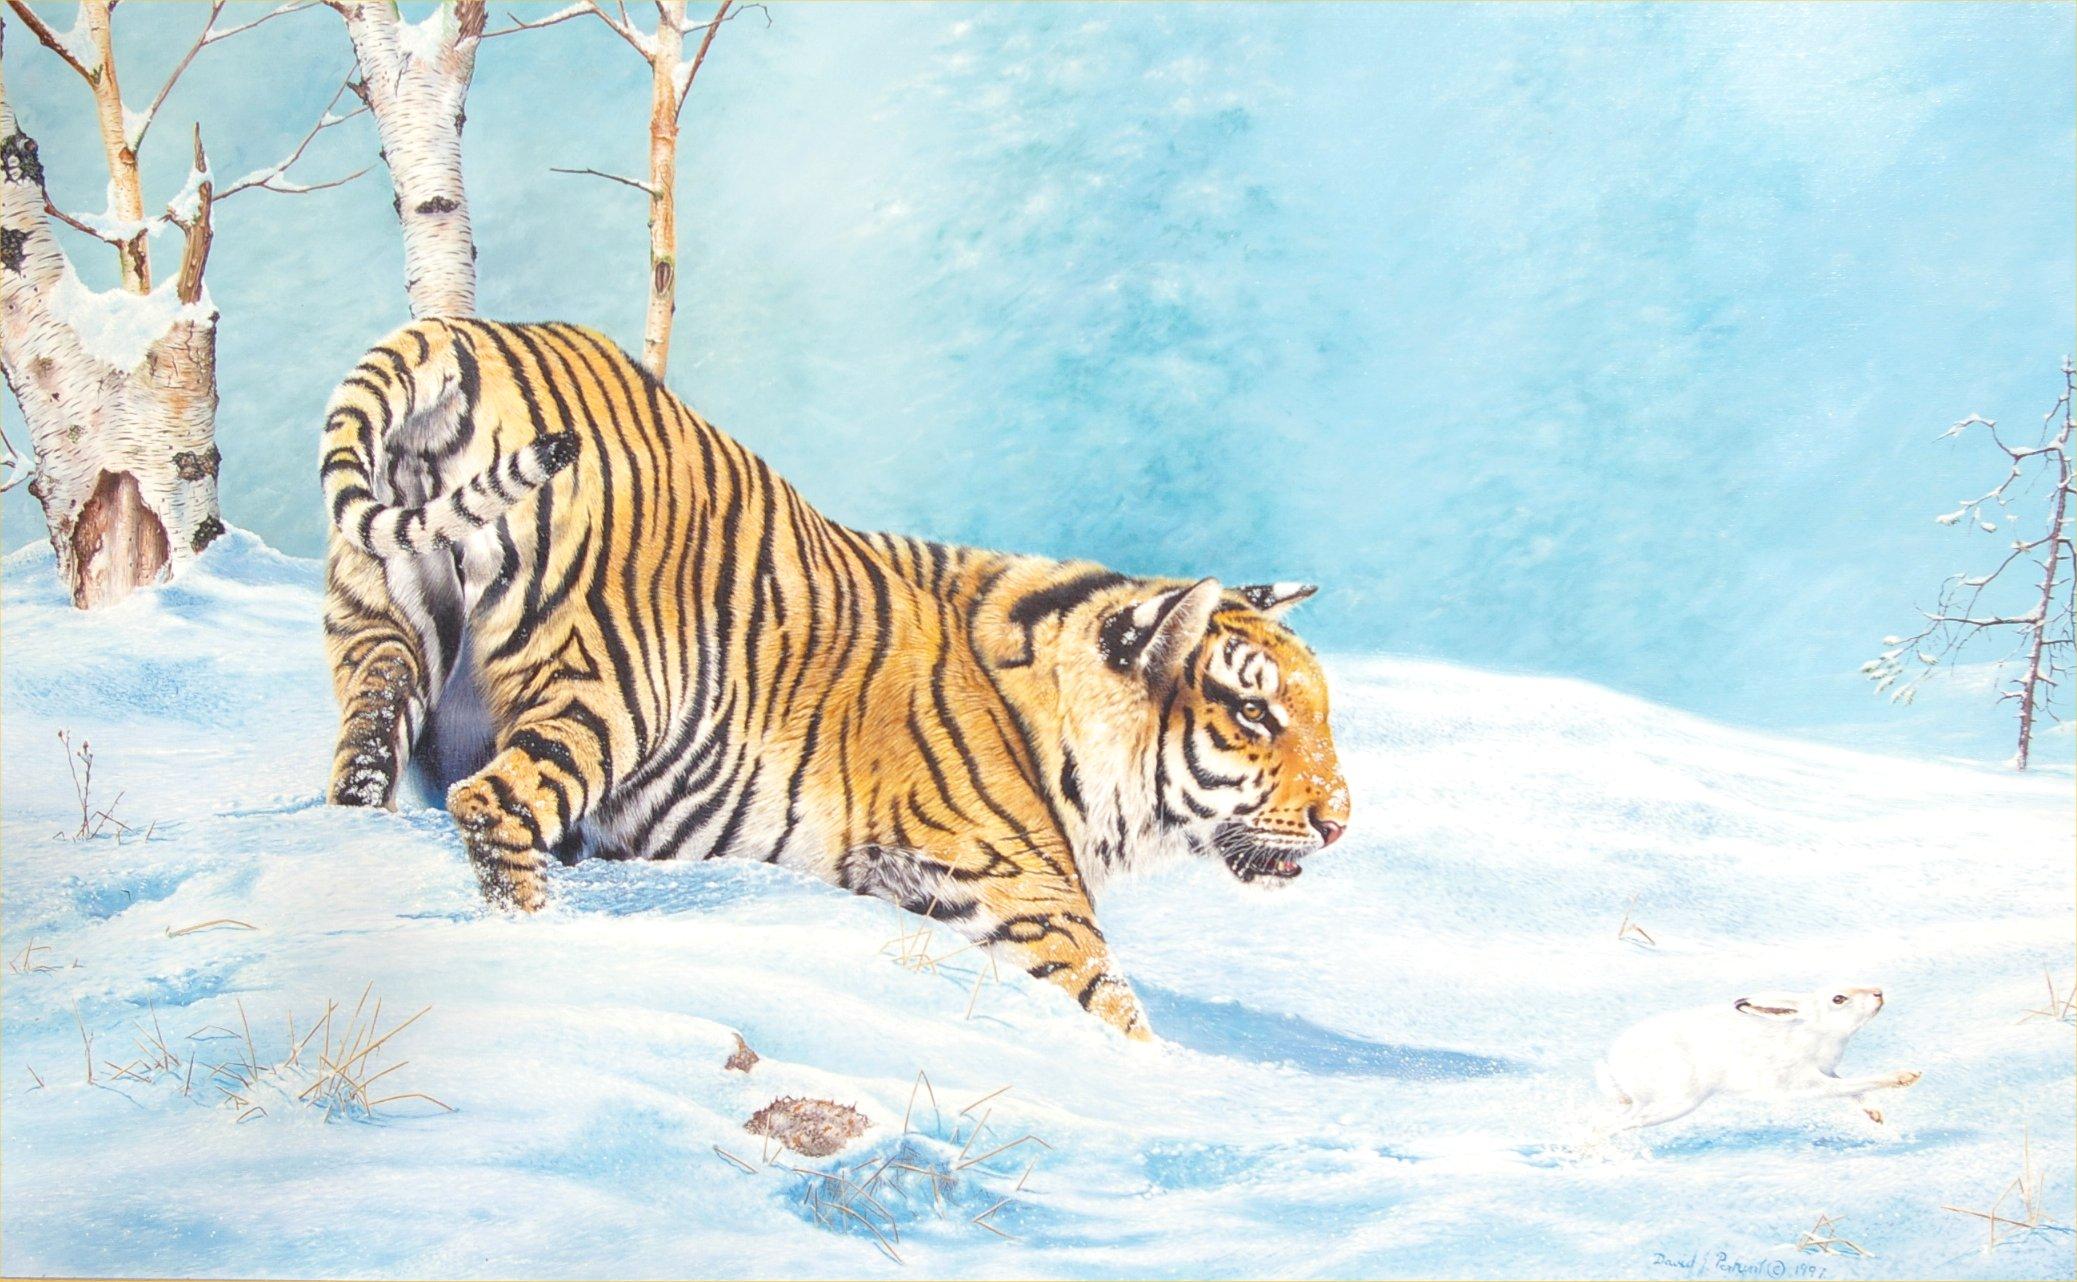 Siberian Tiger - Painting by David J Perkins